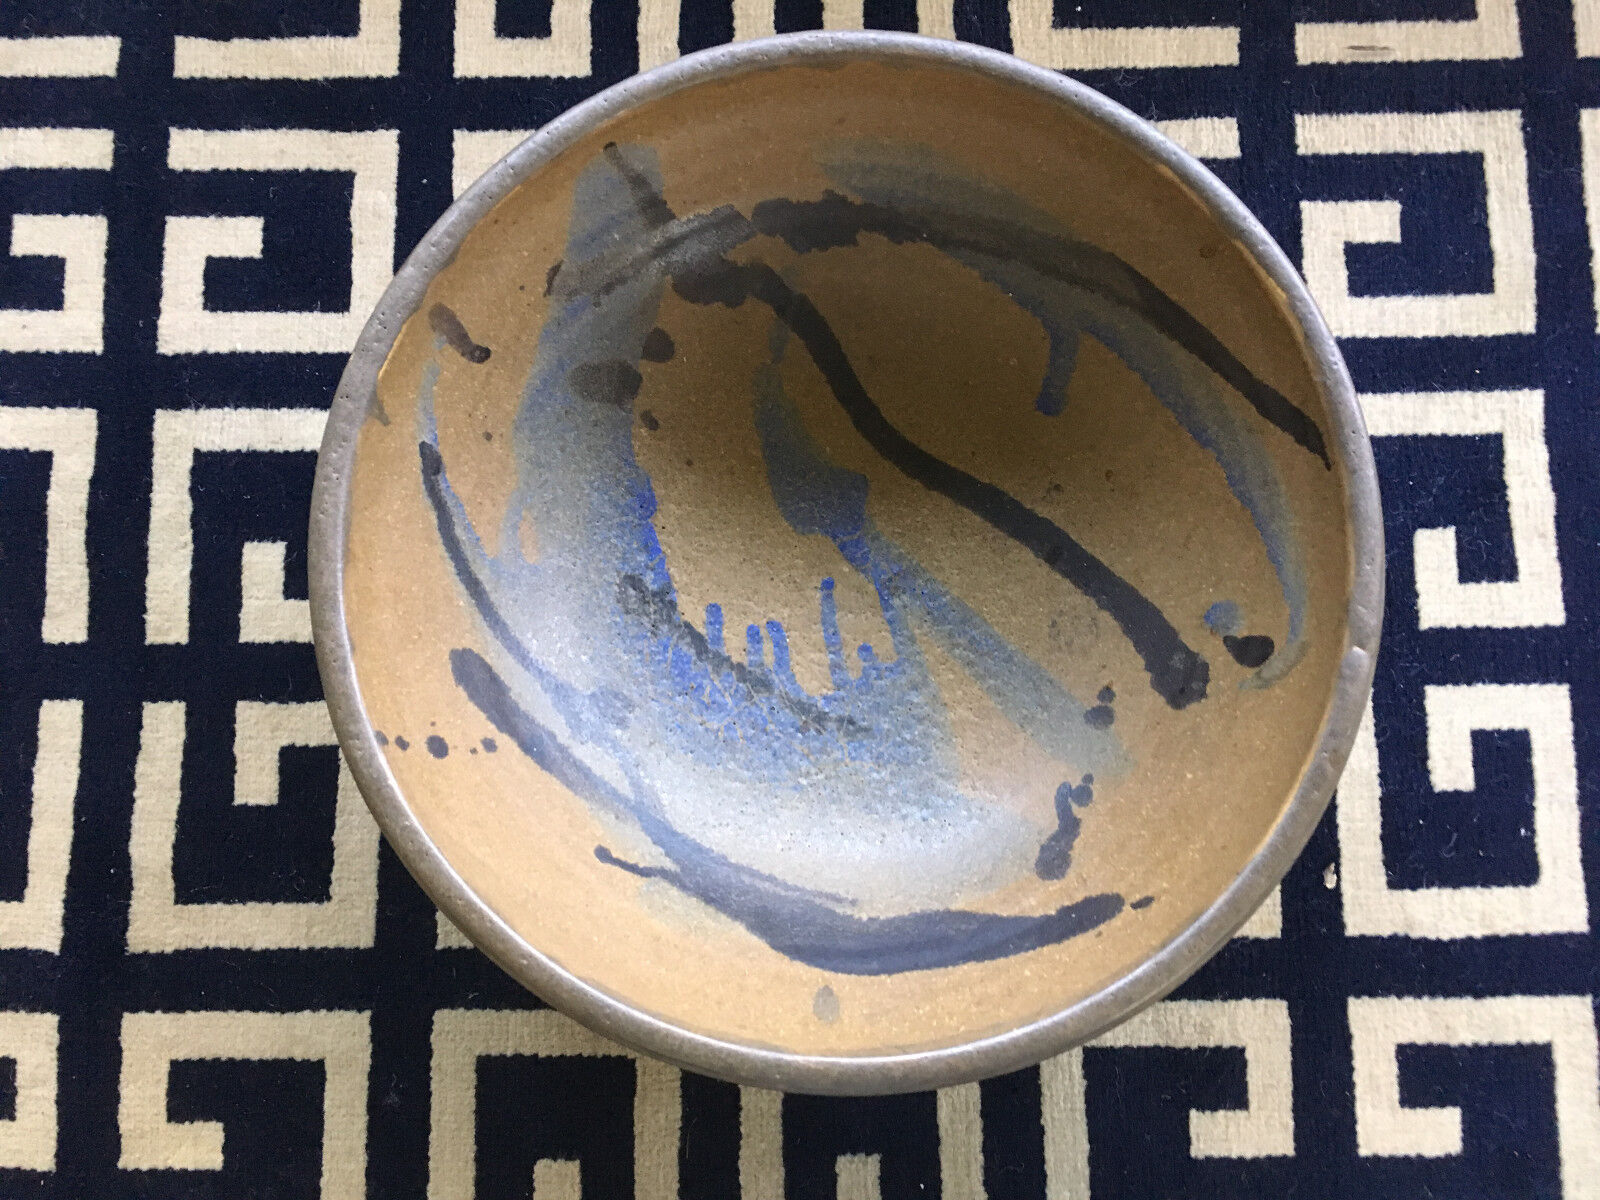 Vtg Mid Century Modern / Large Ceramic Studio Stoneware Bowl -Pottery